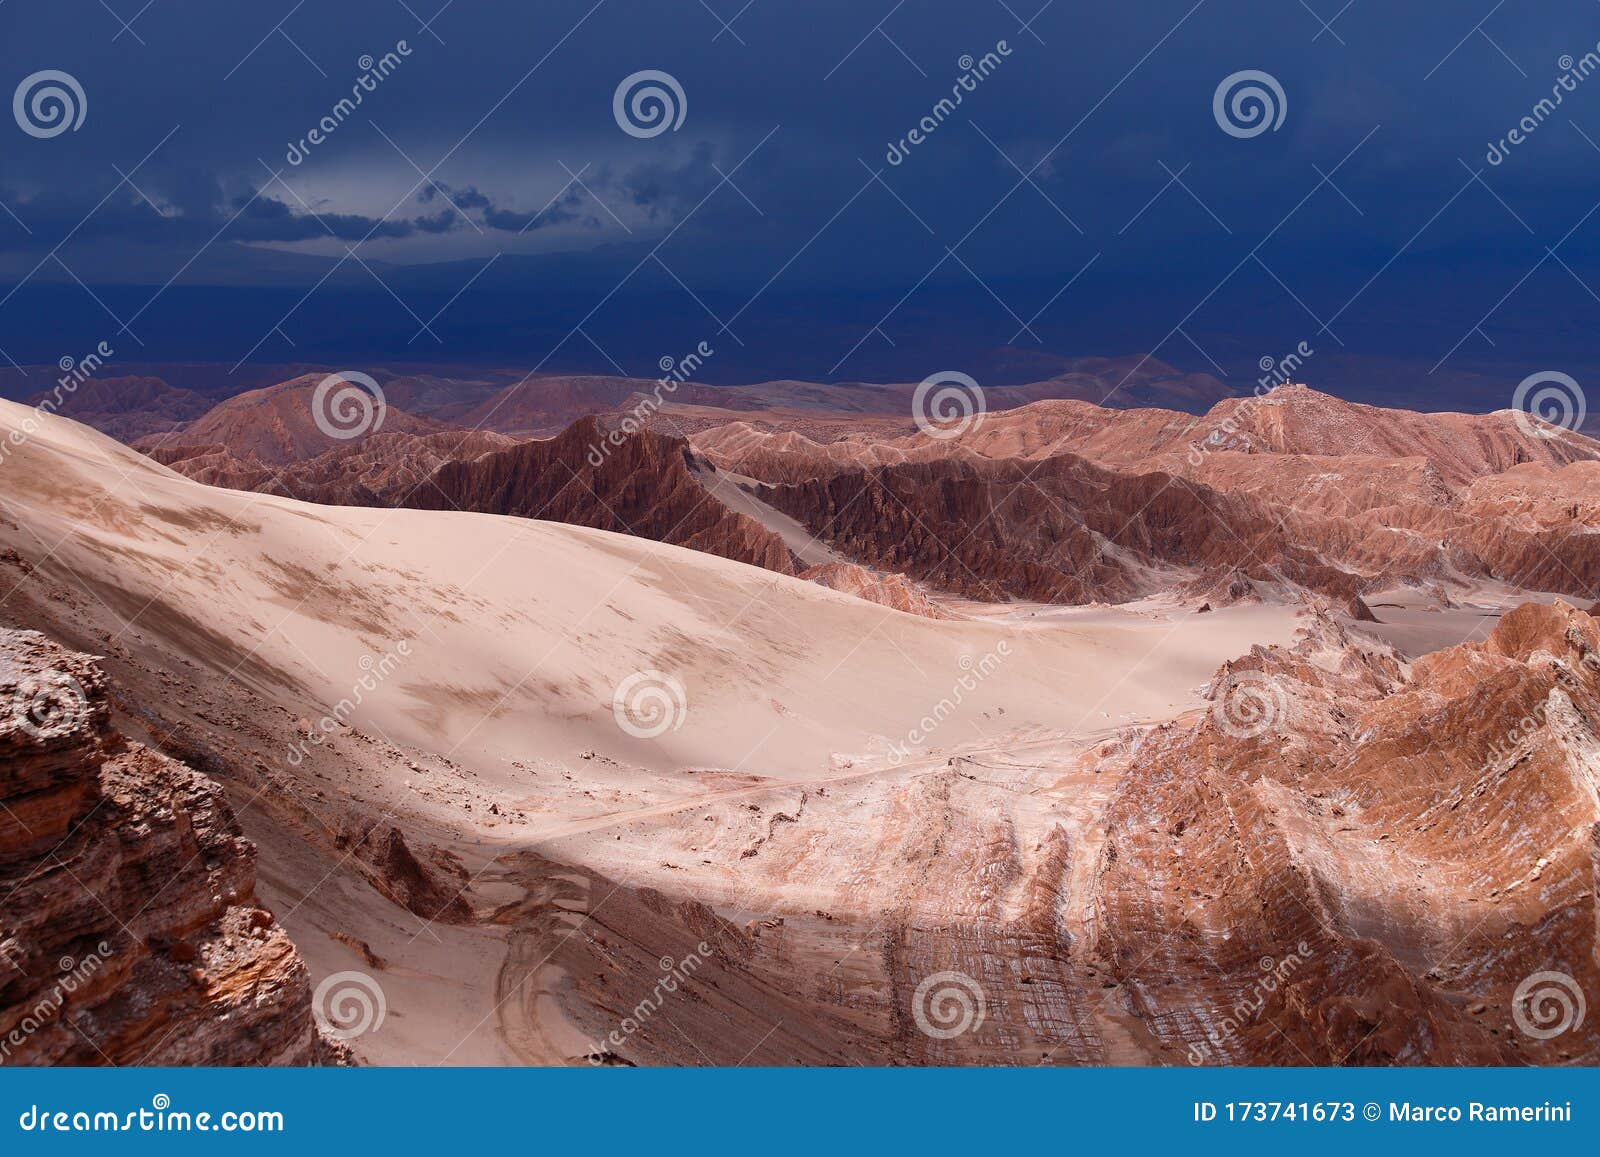 storm clouds in the landscape of the atacama desert. the rocks of the mars valley valle de marte and cordillera de la sal,